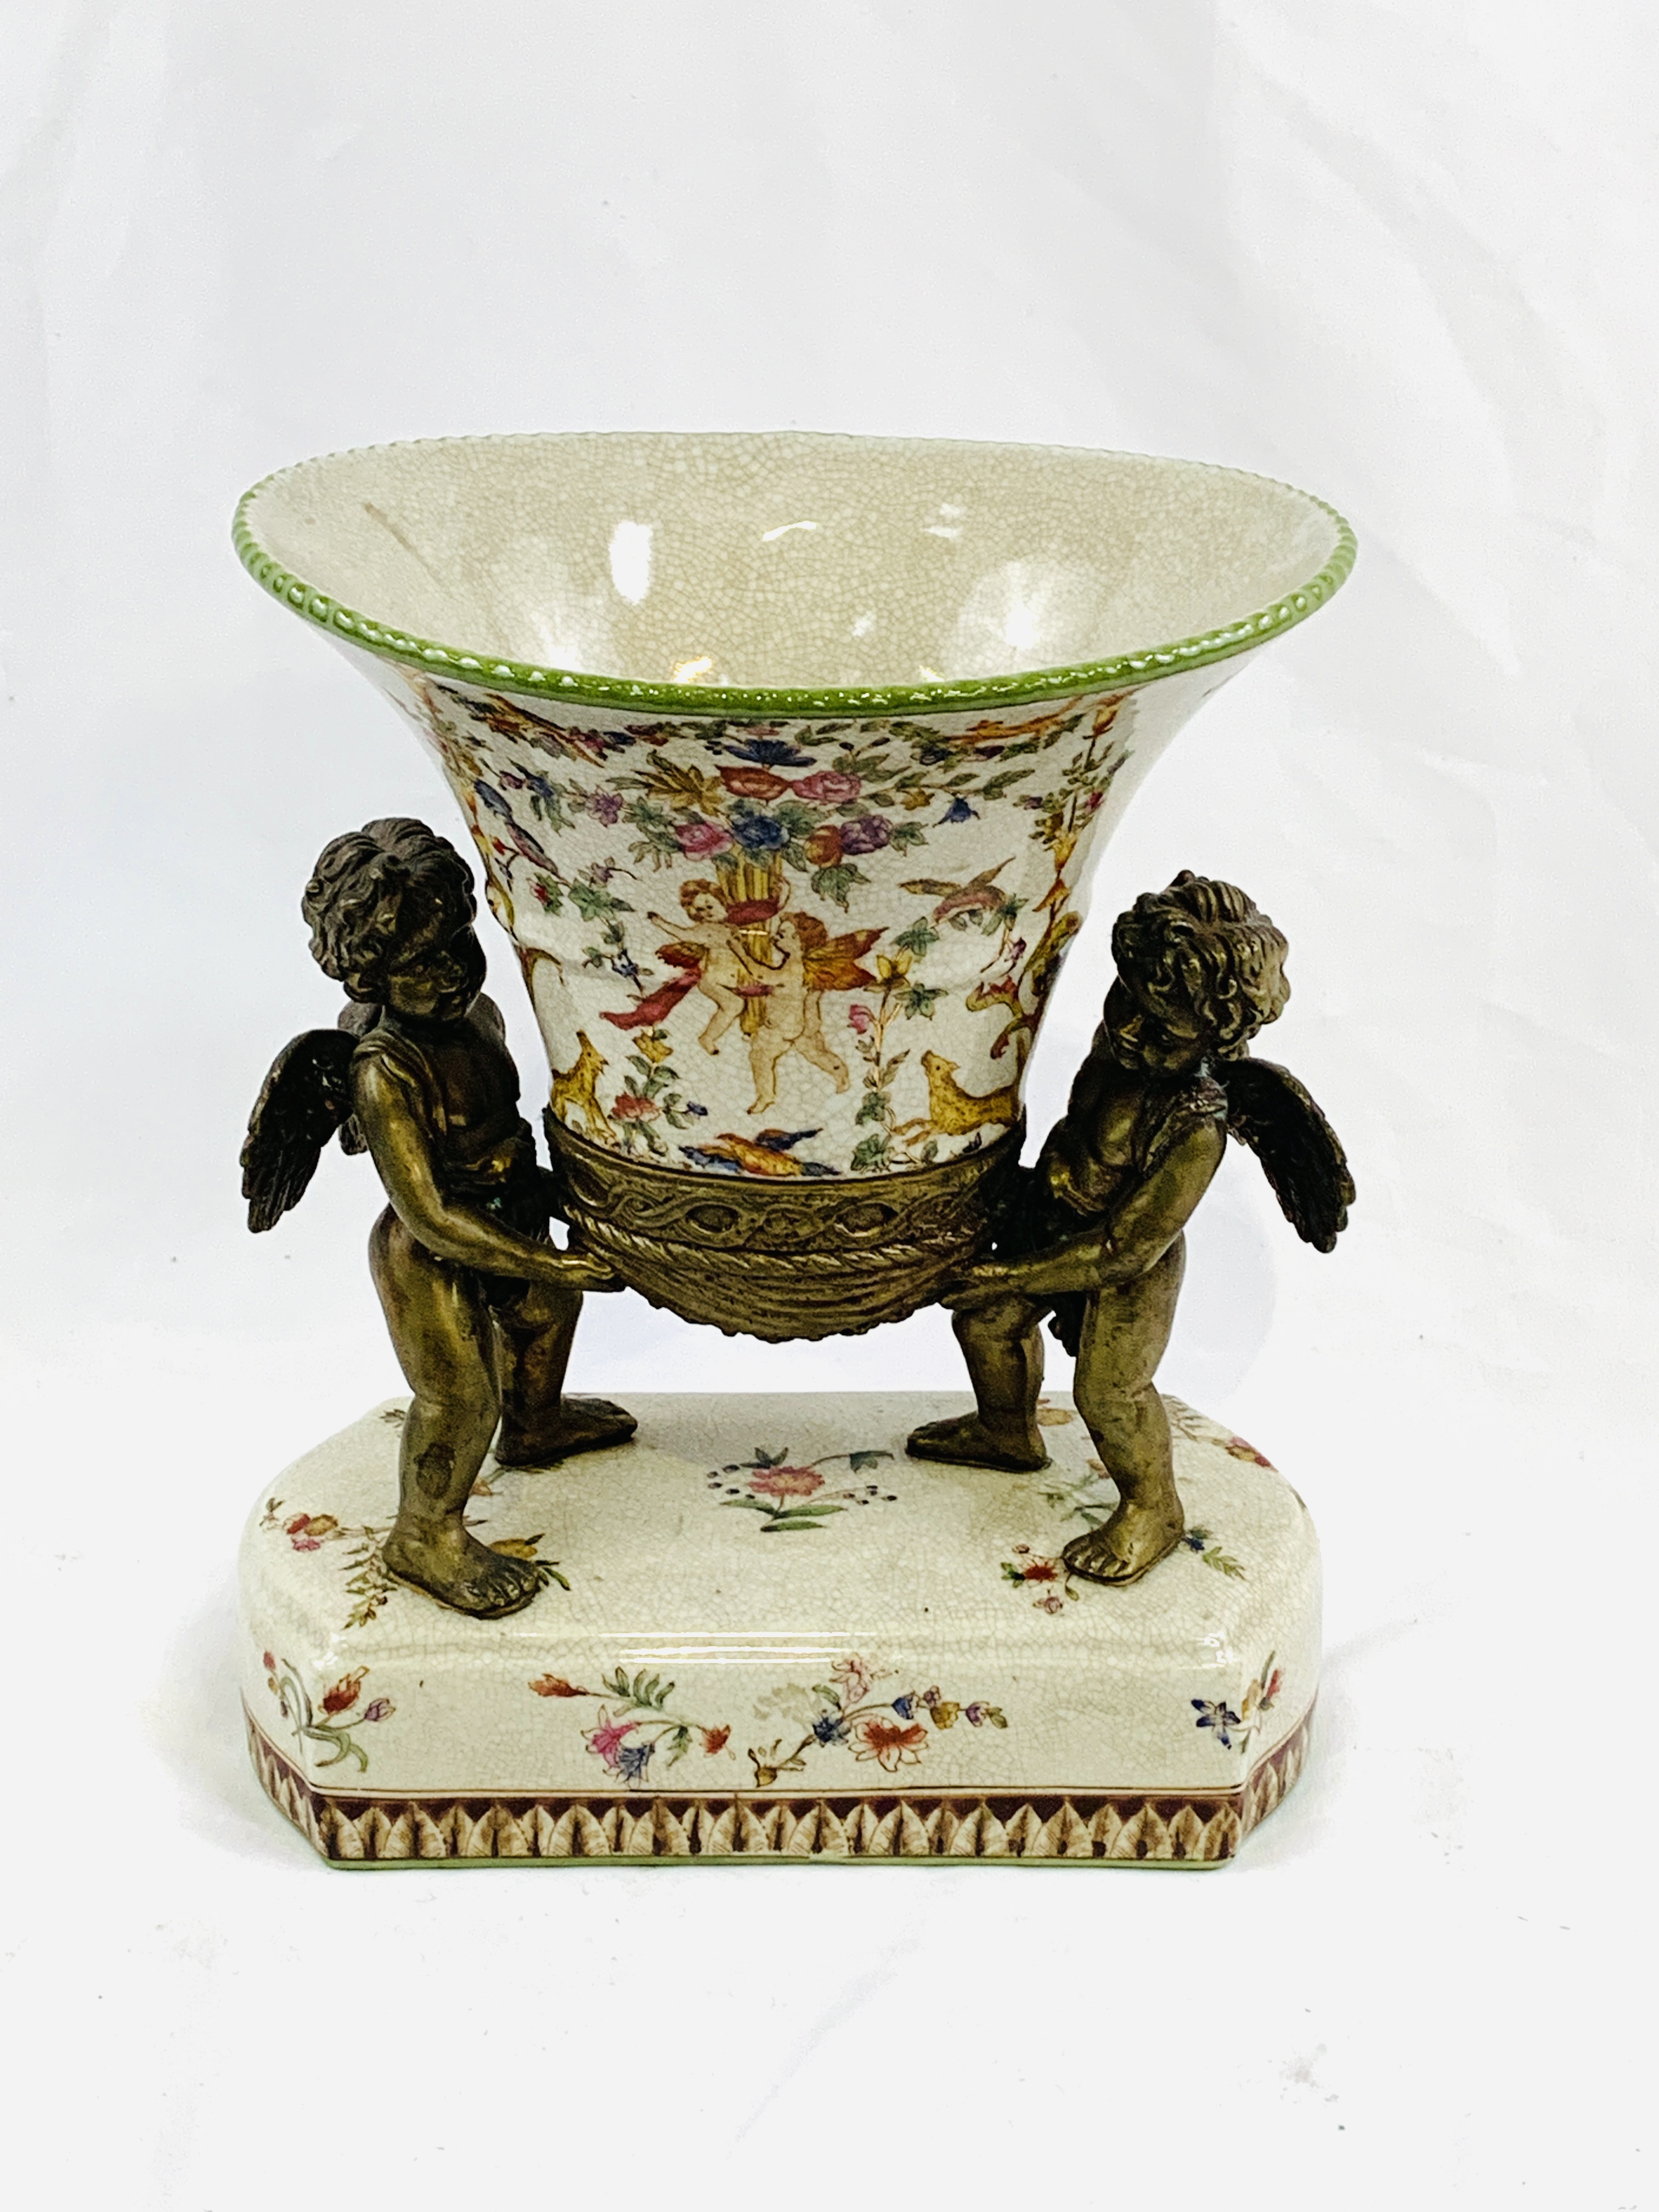 Decorative ceramic centrepiece with mounted ormolu cherubs.